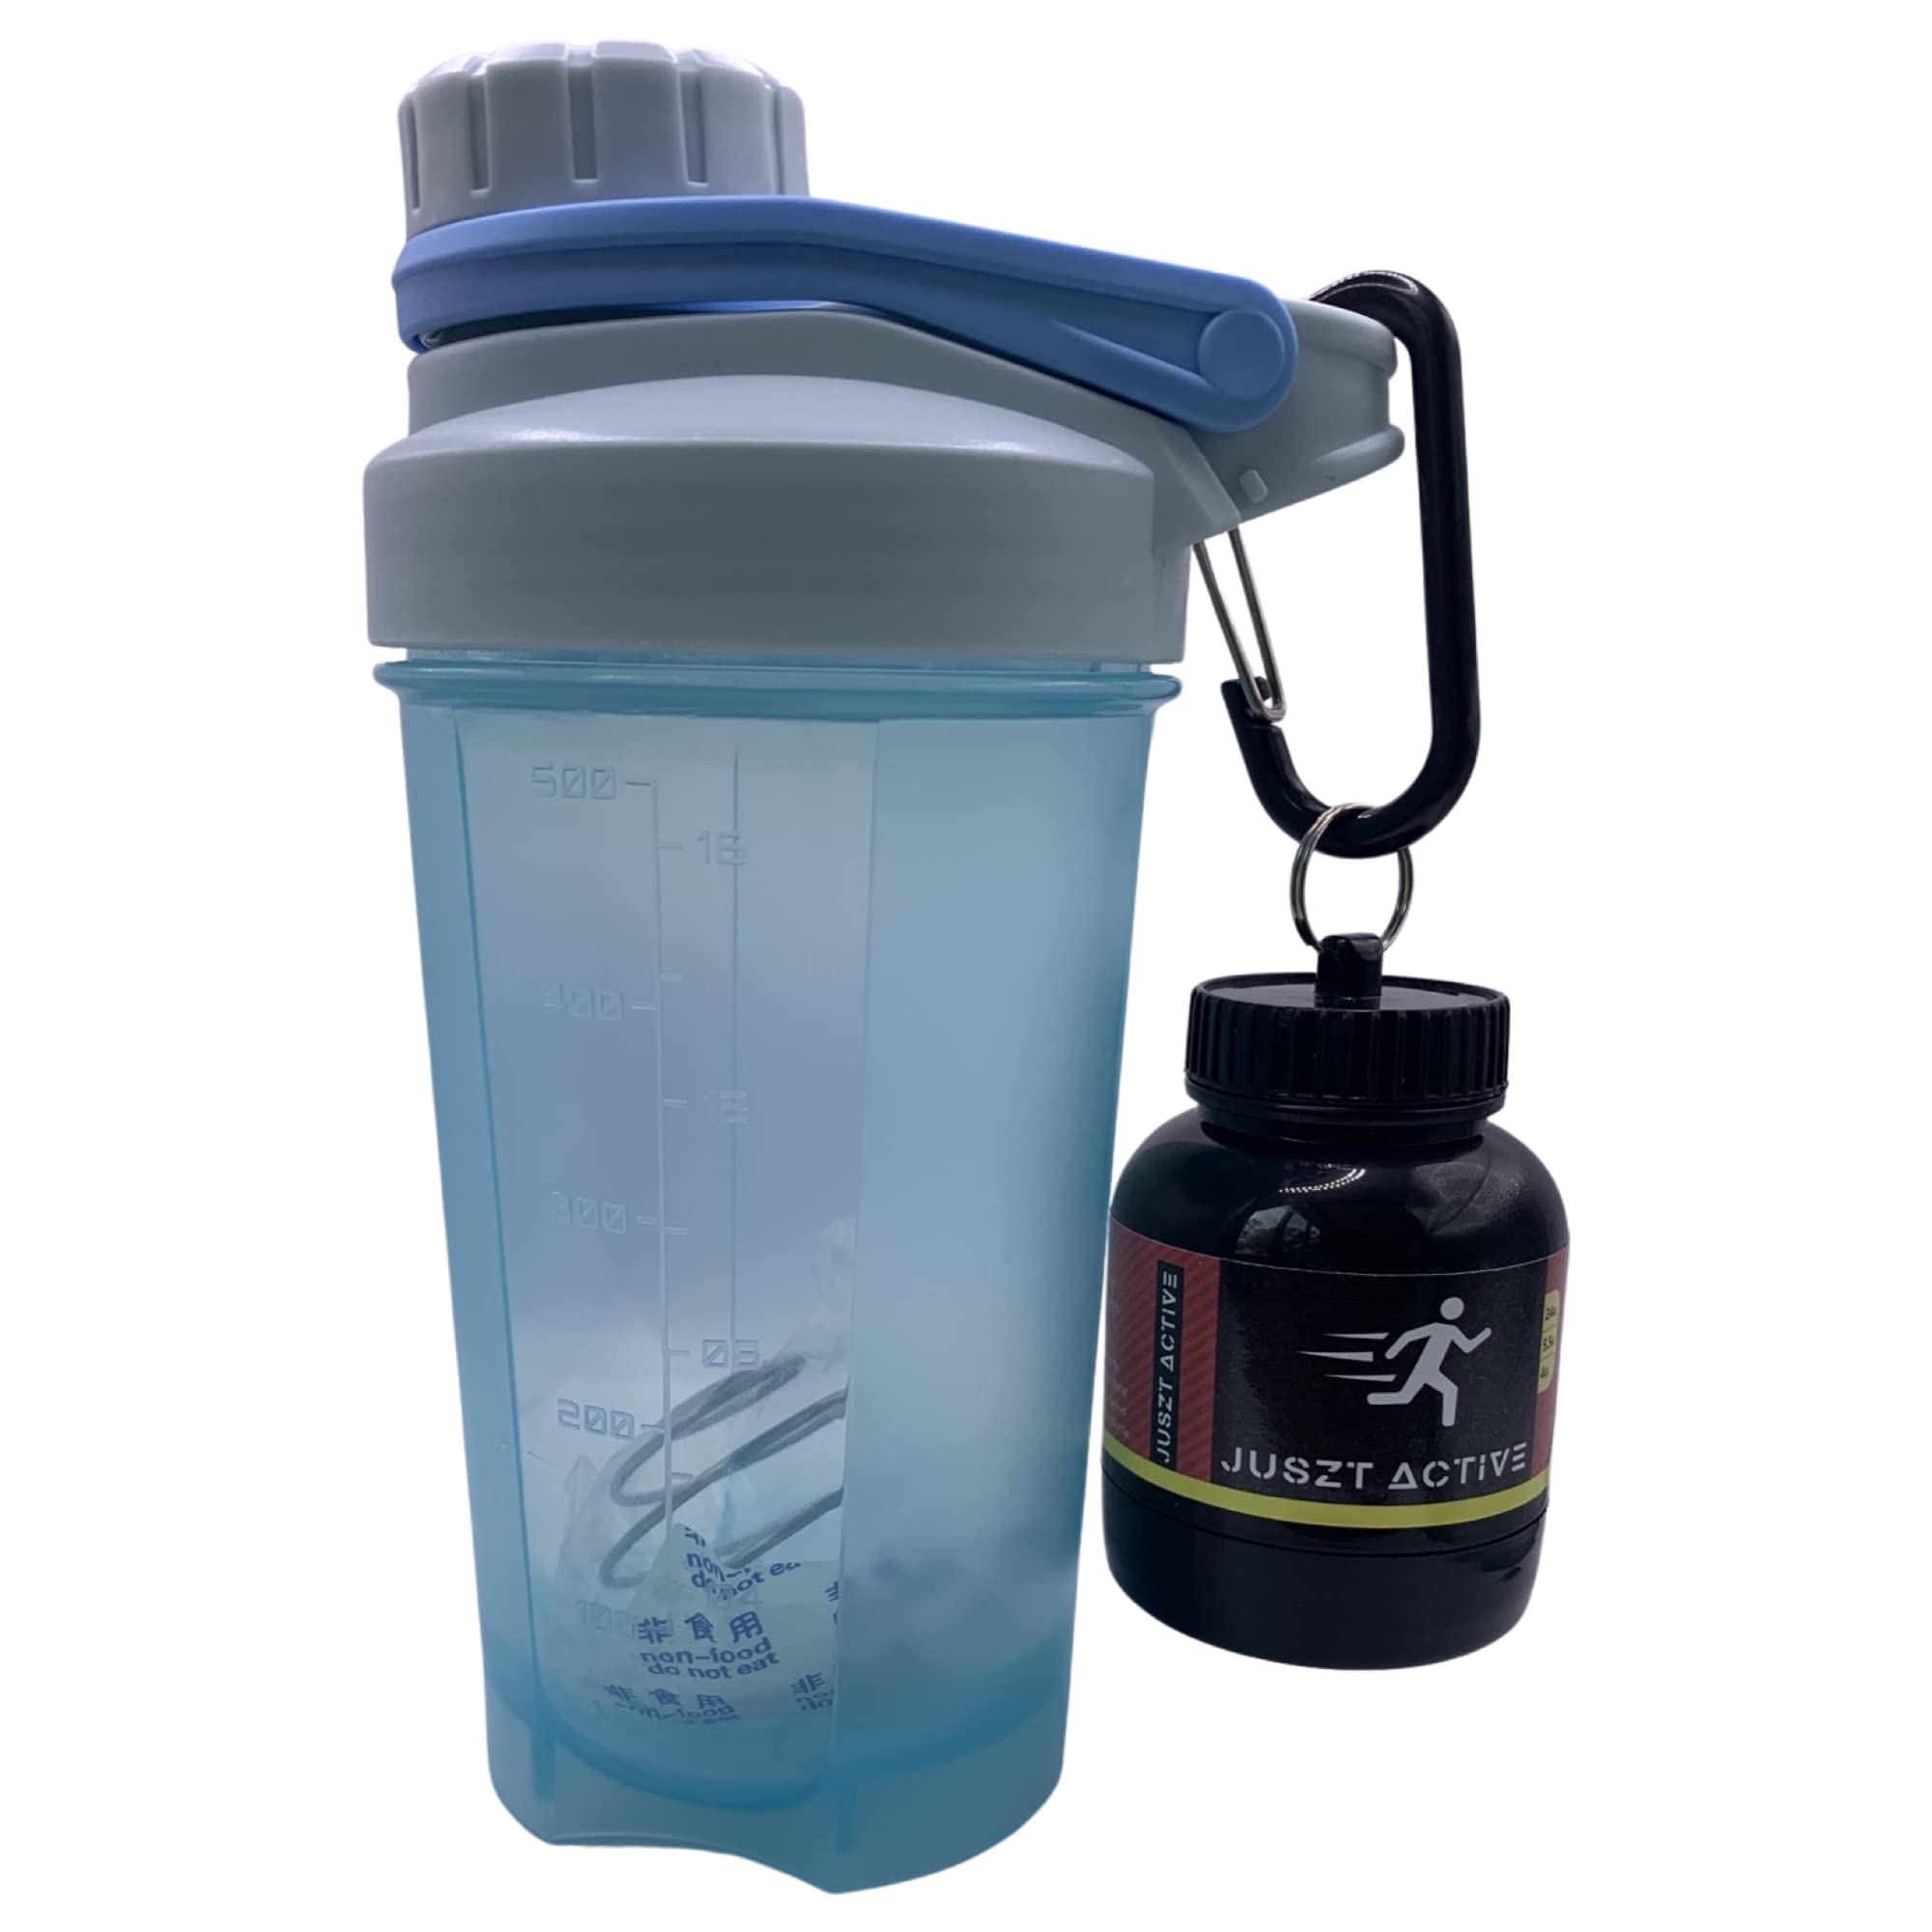 Juszt Active, Protein shaker water bottle 500ml with Protein Powder Storage Keychain, Portable Supplement Powder Container | 100g Capacity, Black Protein Powder Container Keyring(Blue)